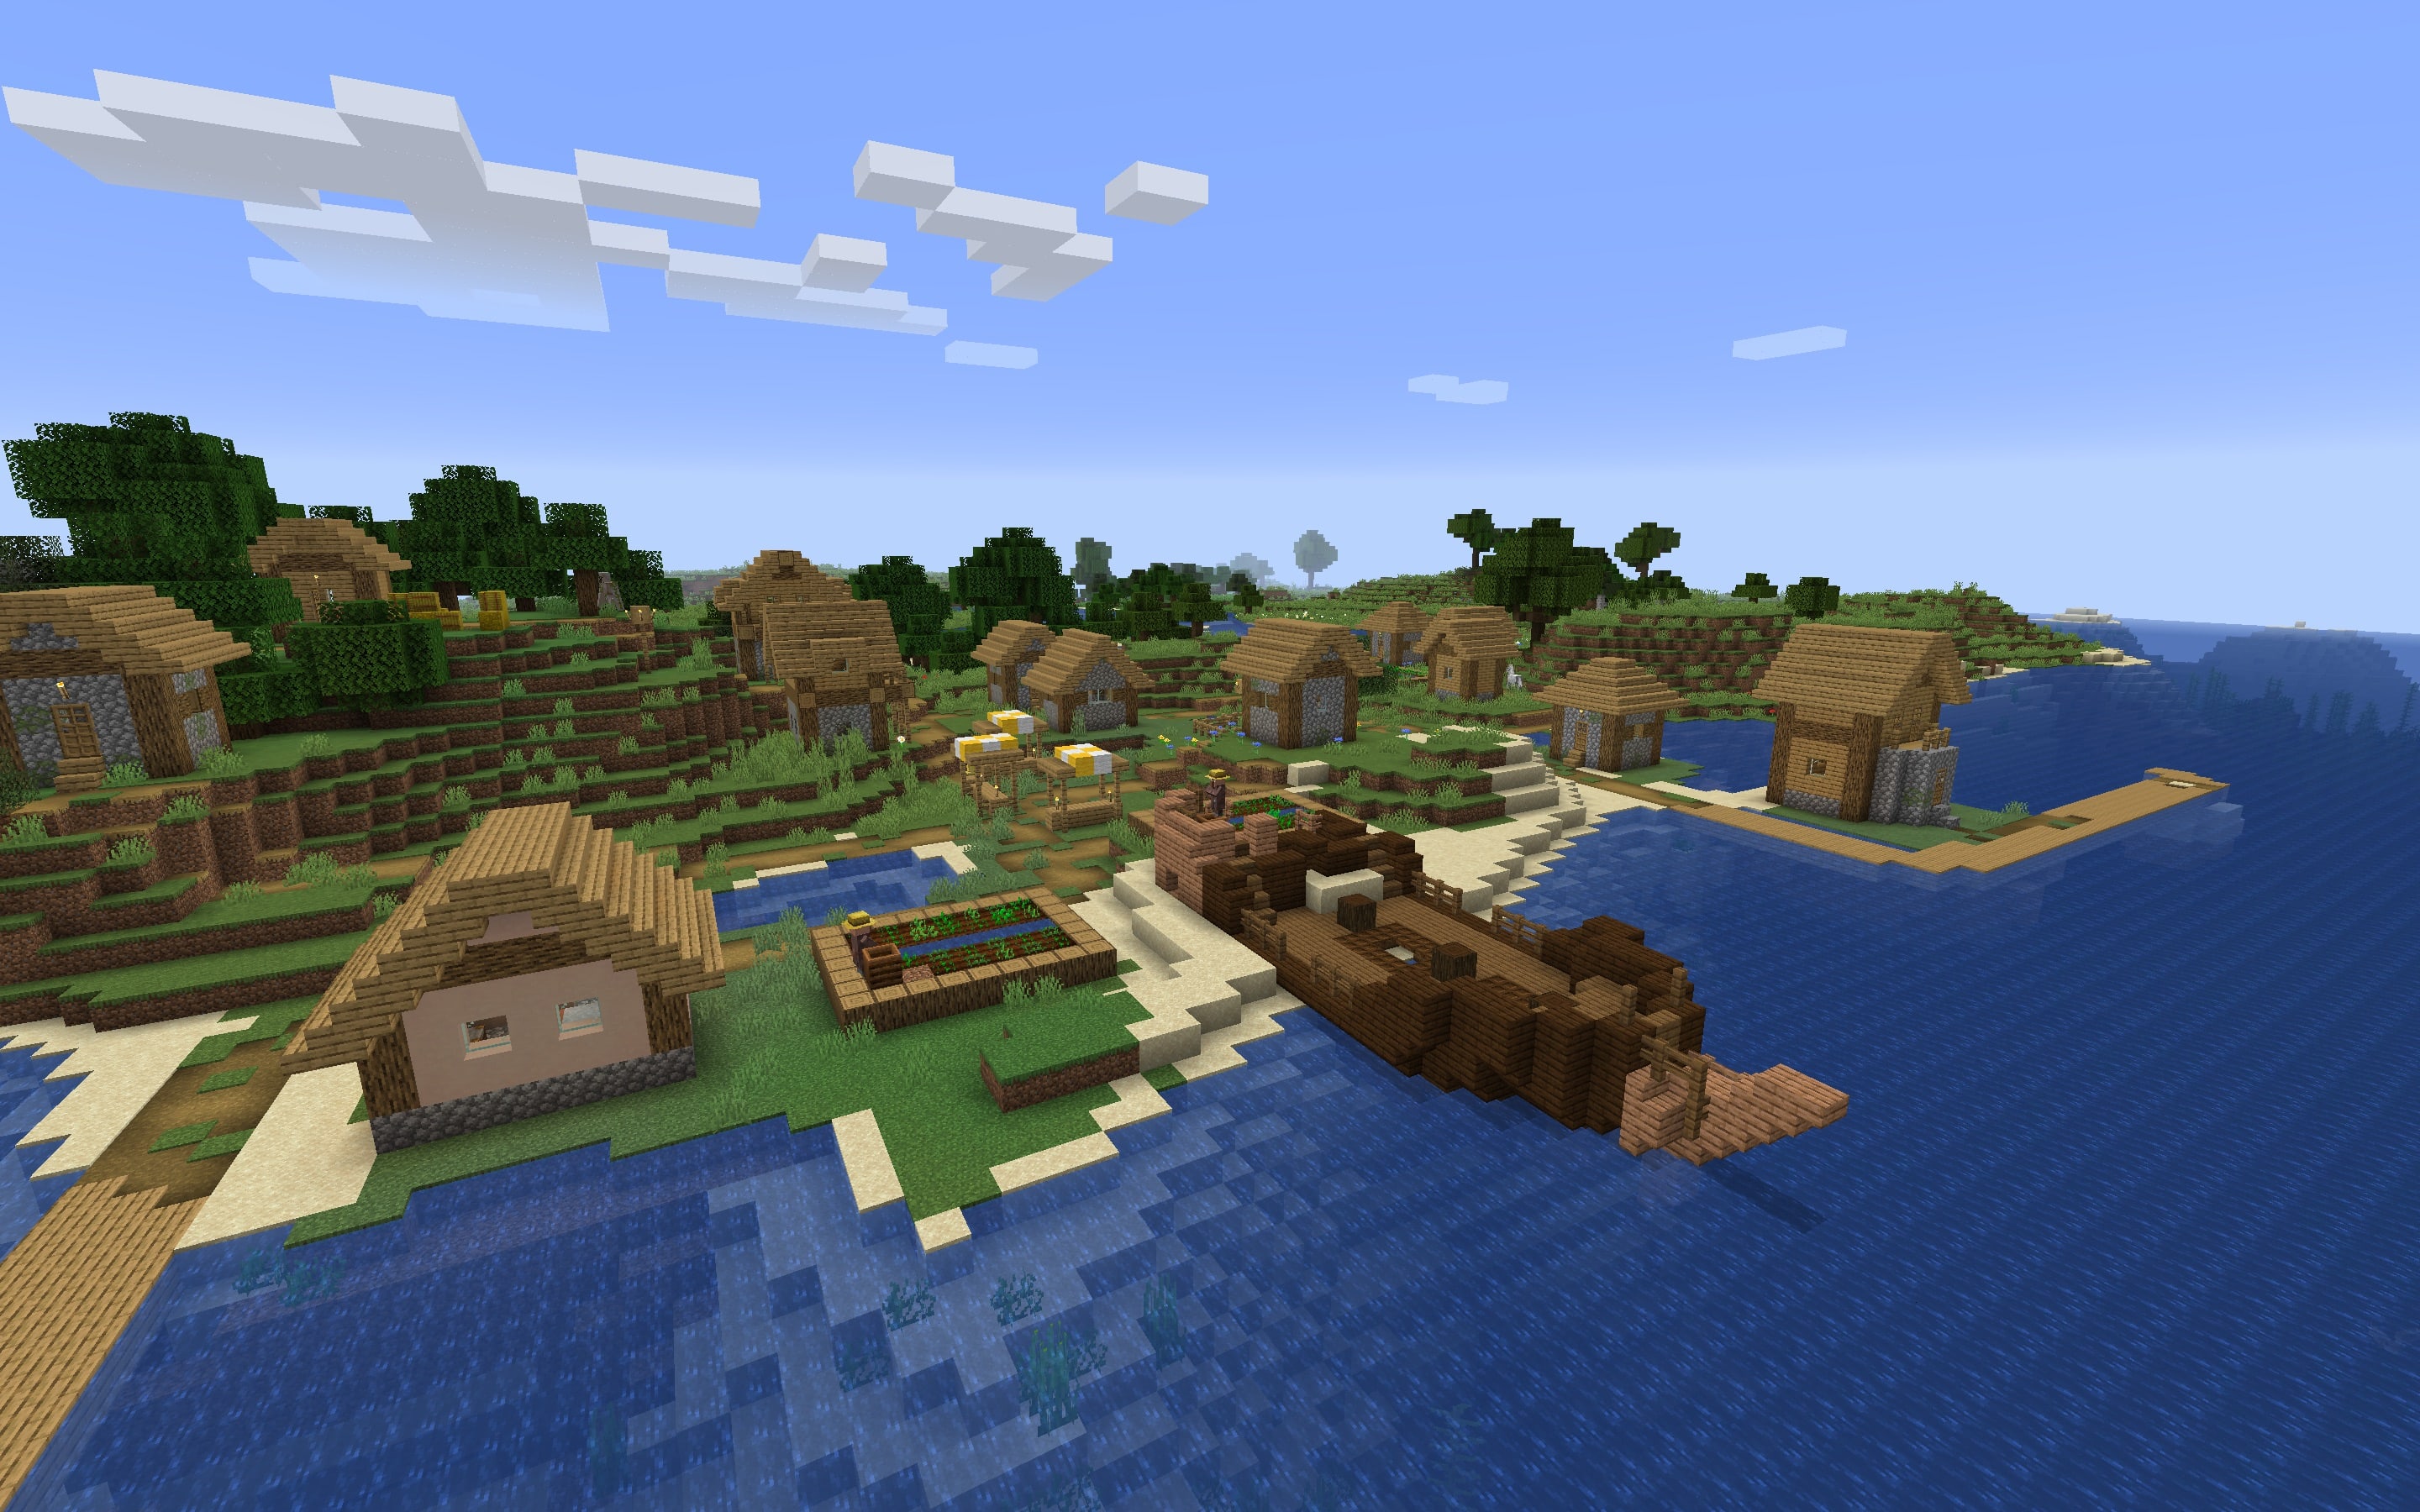 Shipwreck Village Minecraft Seed